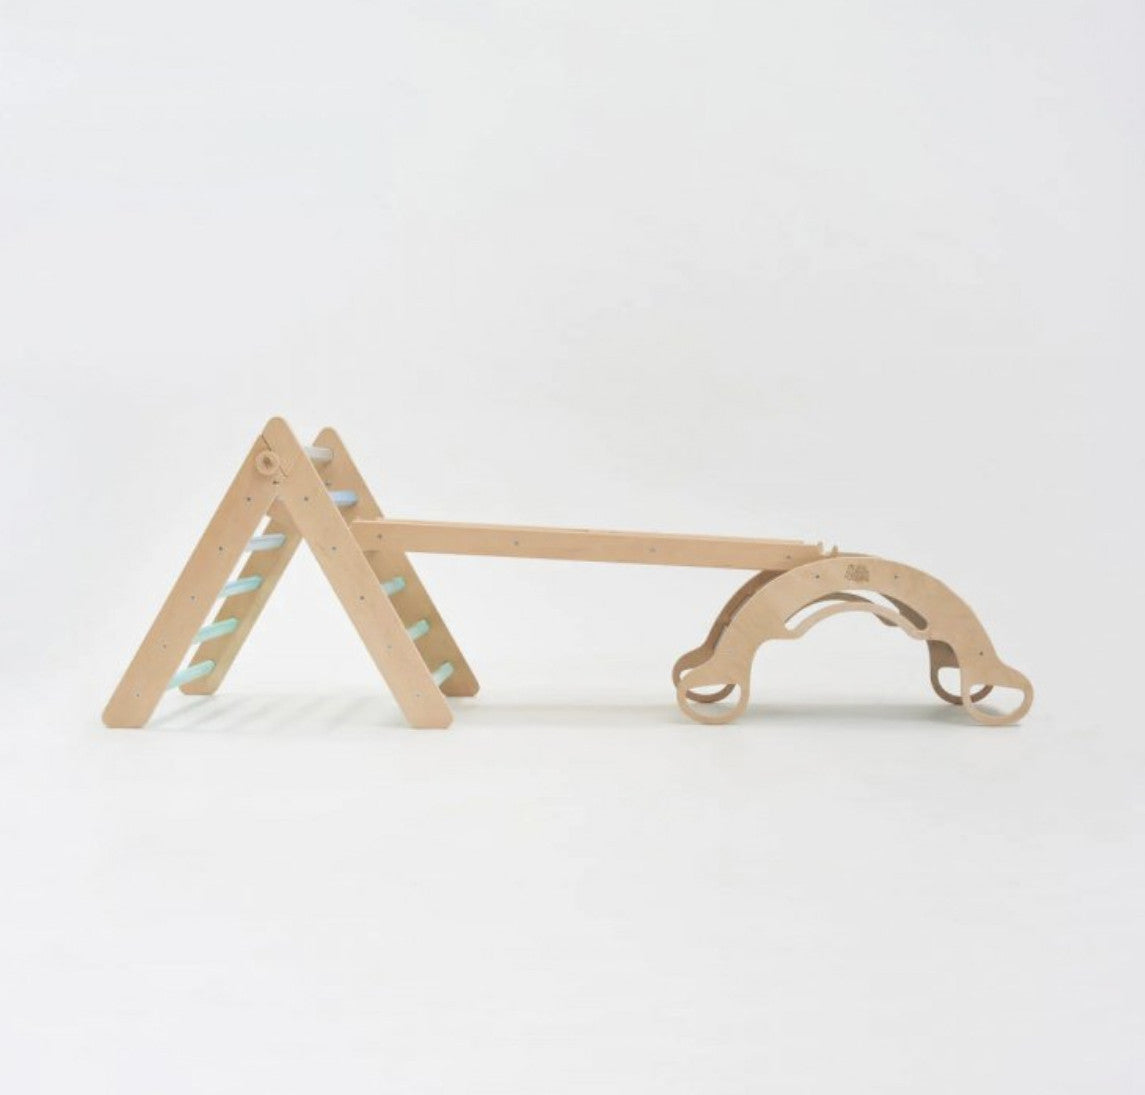 Escalera + tablero de doble cara + columpio de madera - color menta